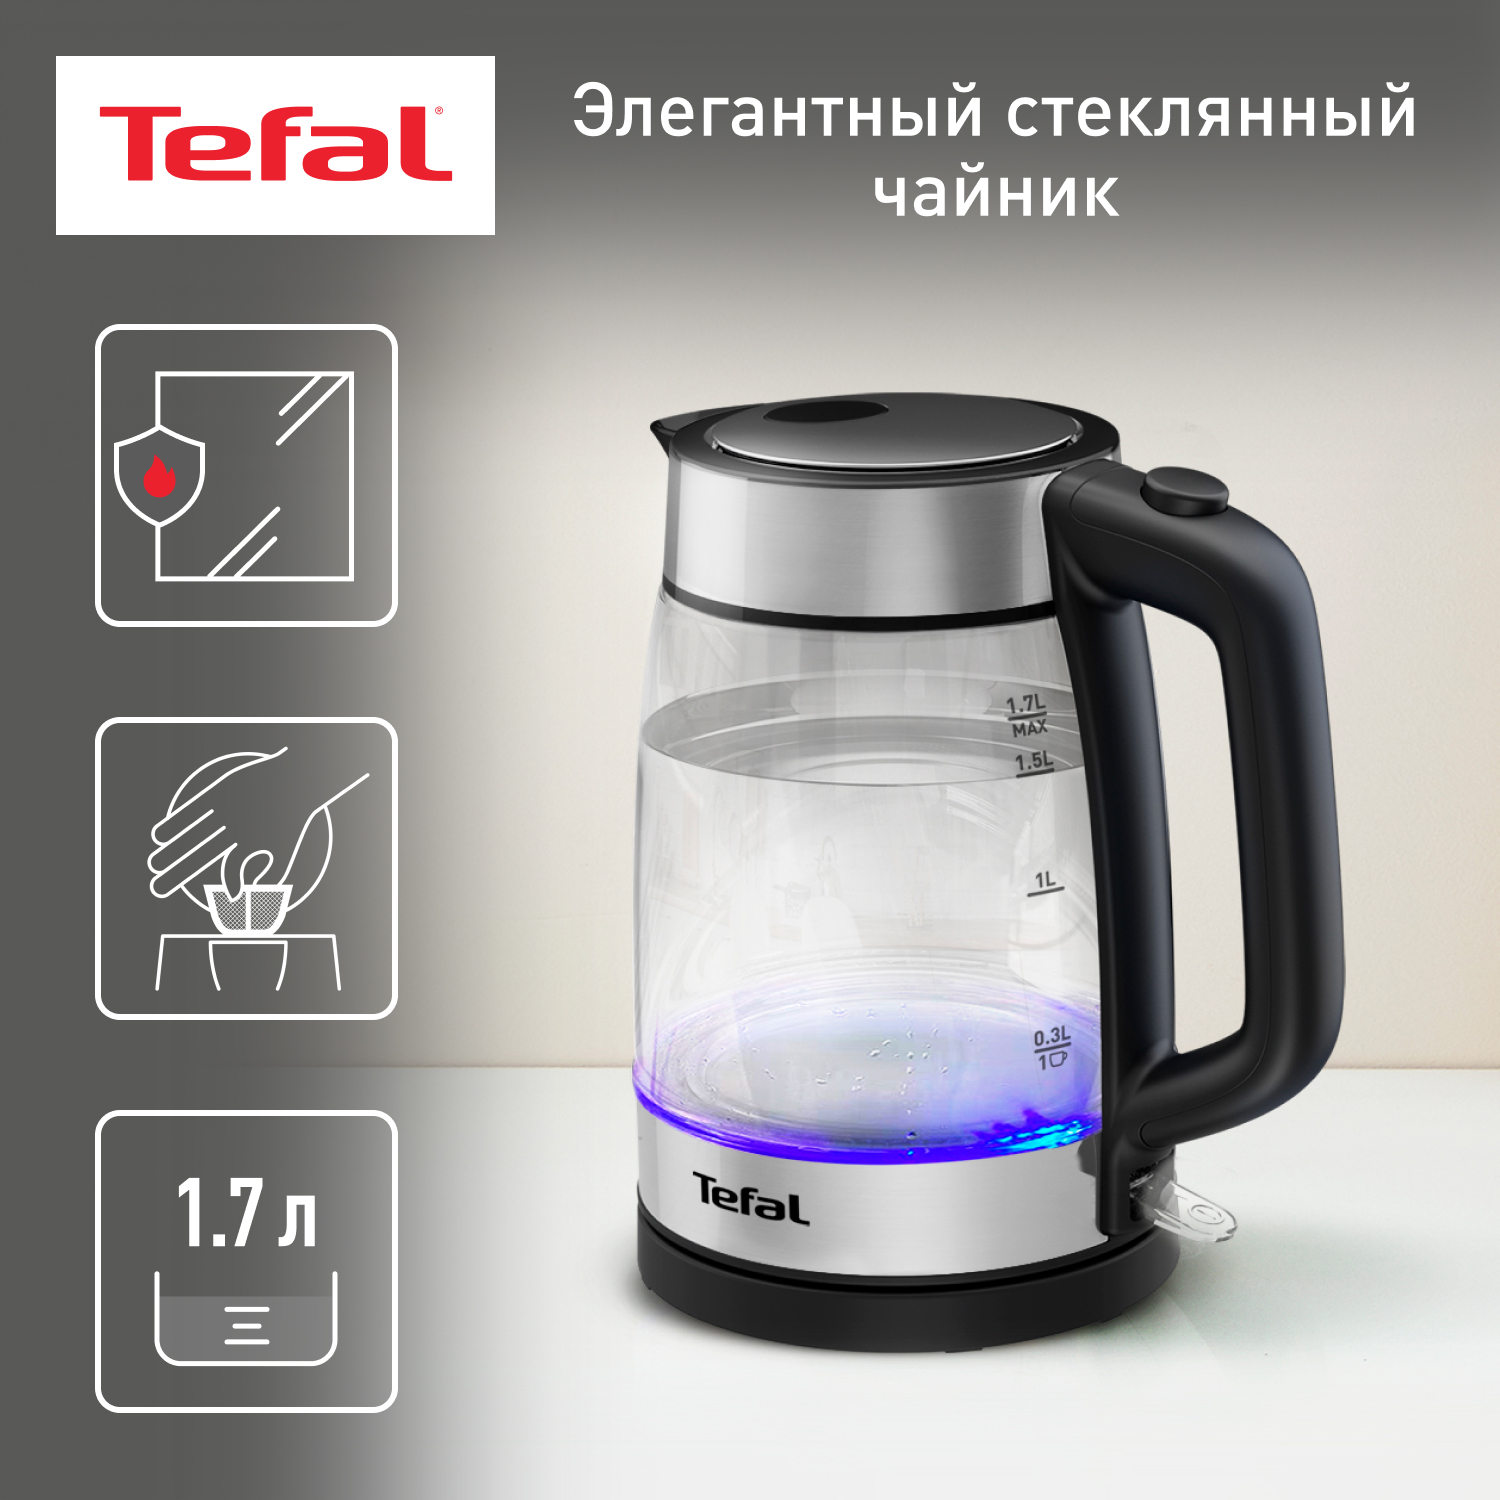 Чайник электрический Tefal KI700830 1.7 л прозрачный, серебристый, черный фен tefal hv5700d8 2200 вт